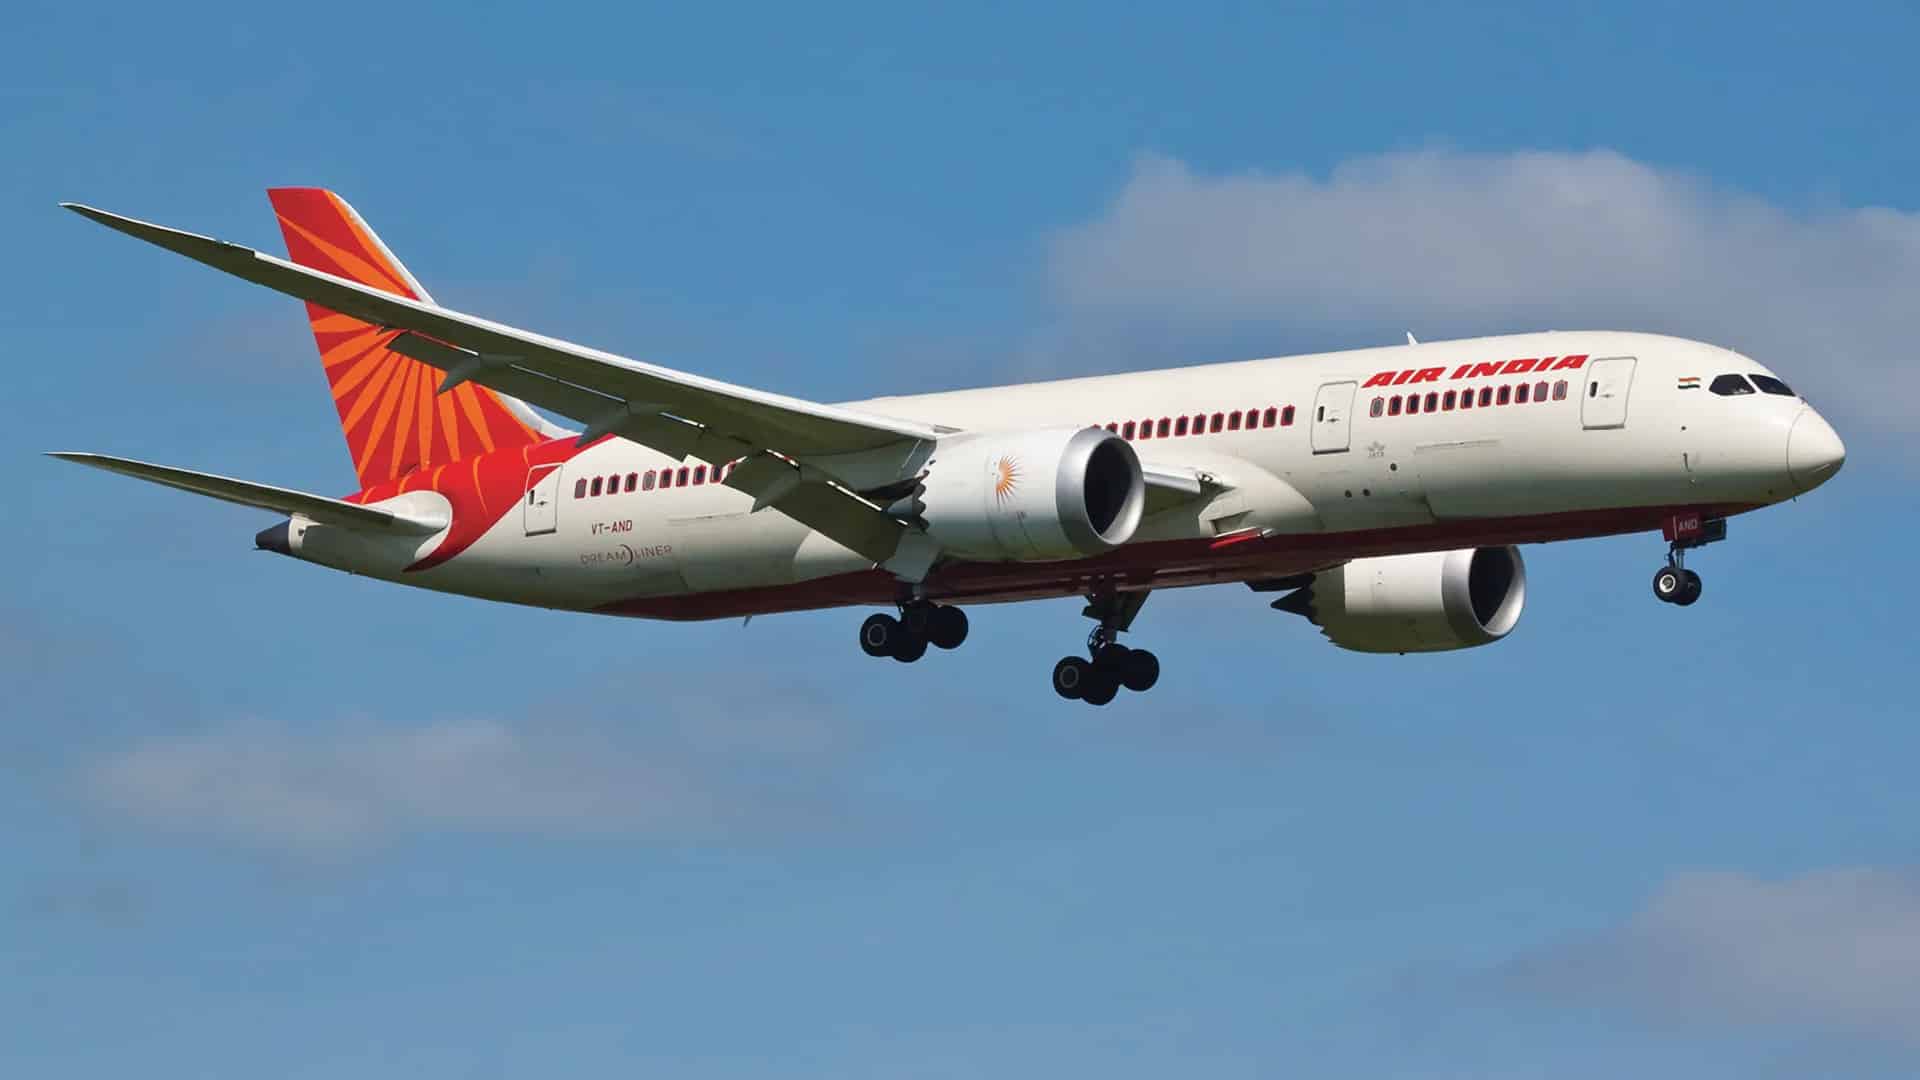 Air India Newark-Delhi flight makes emergency landing in Stockholm